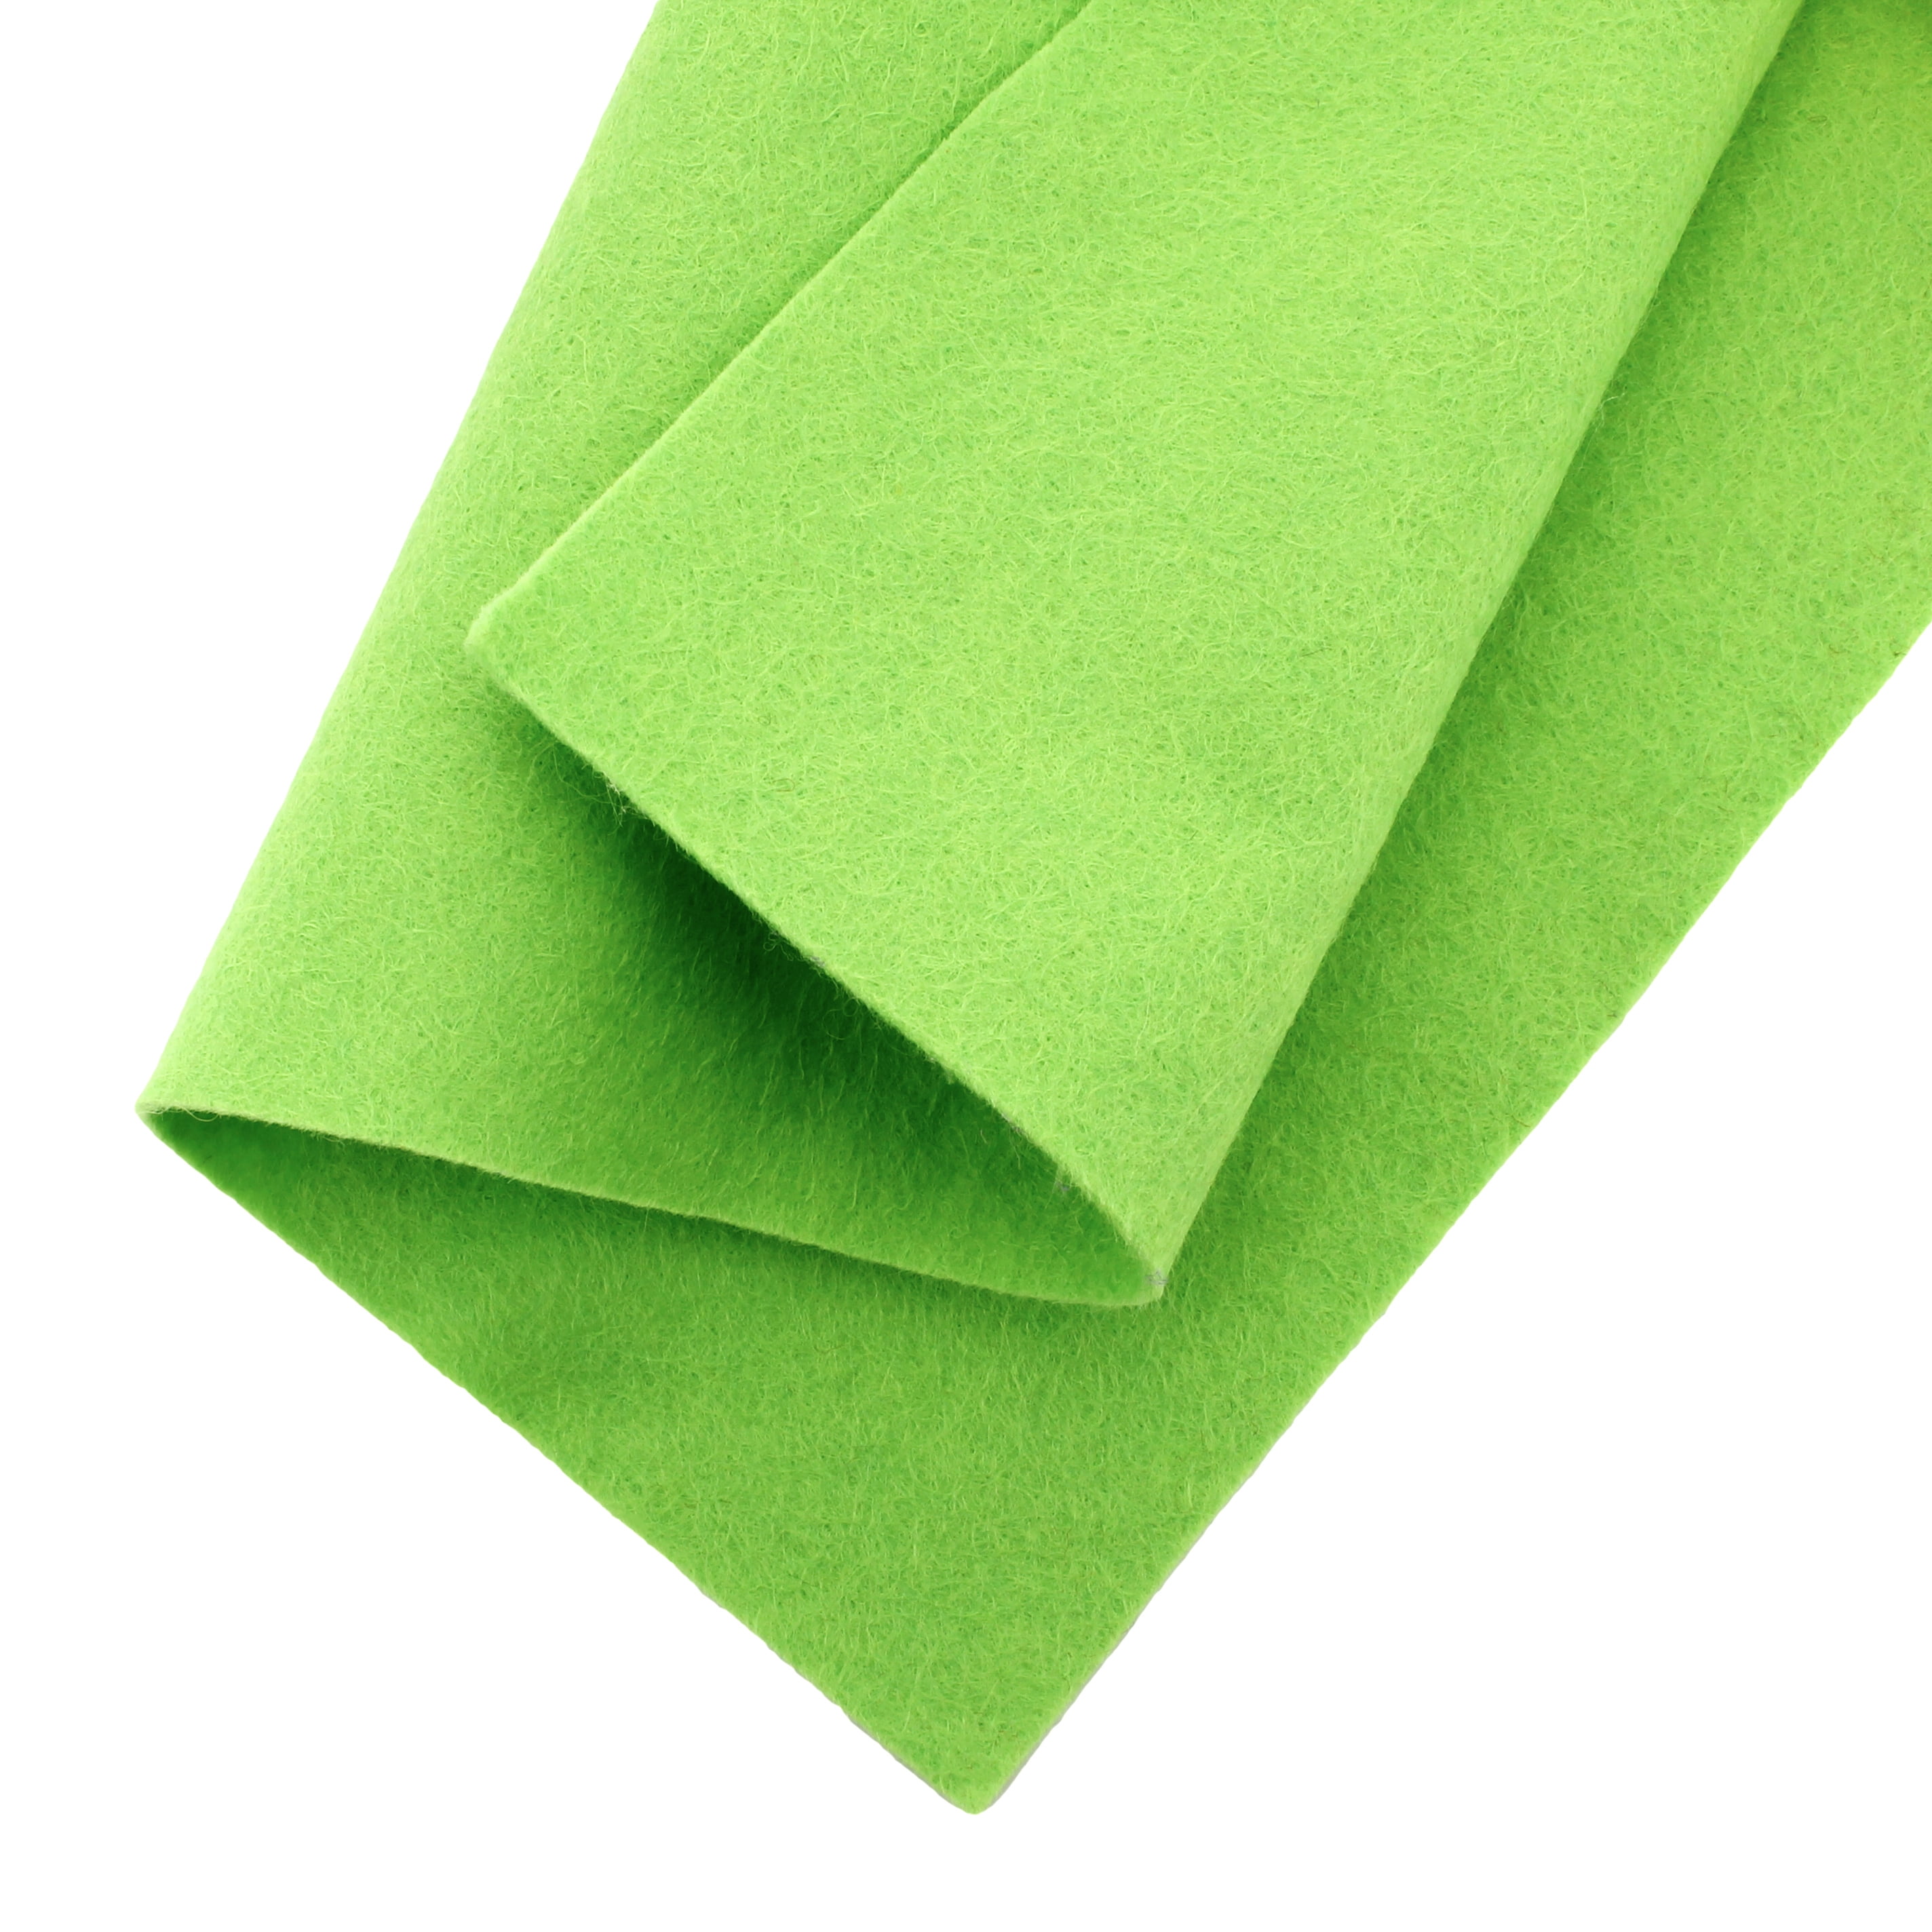 Merino Wool Blend Felt Crafting Sheets ( 8 5/8 x 11 5/8) - Apple Green 